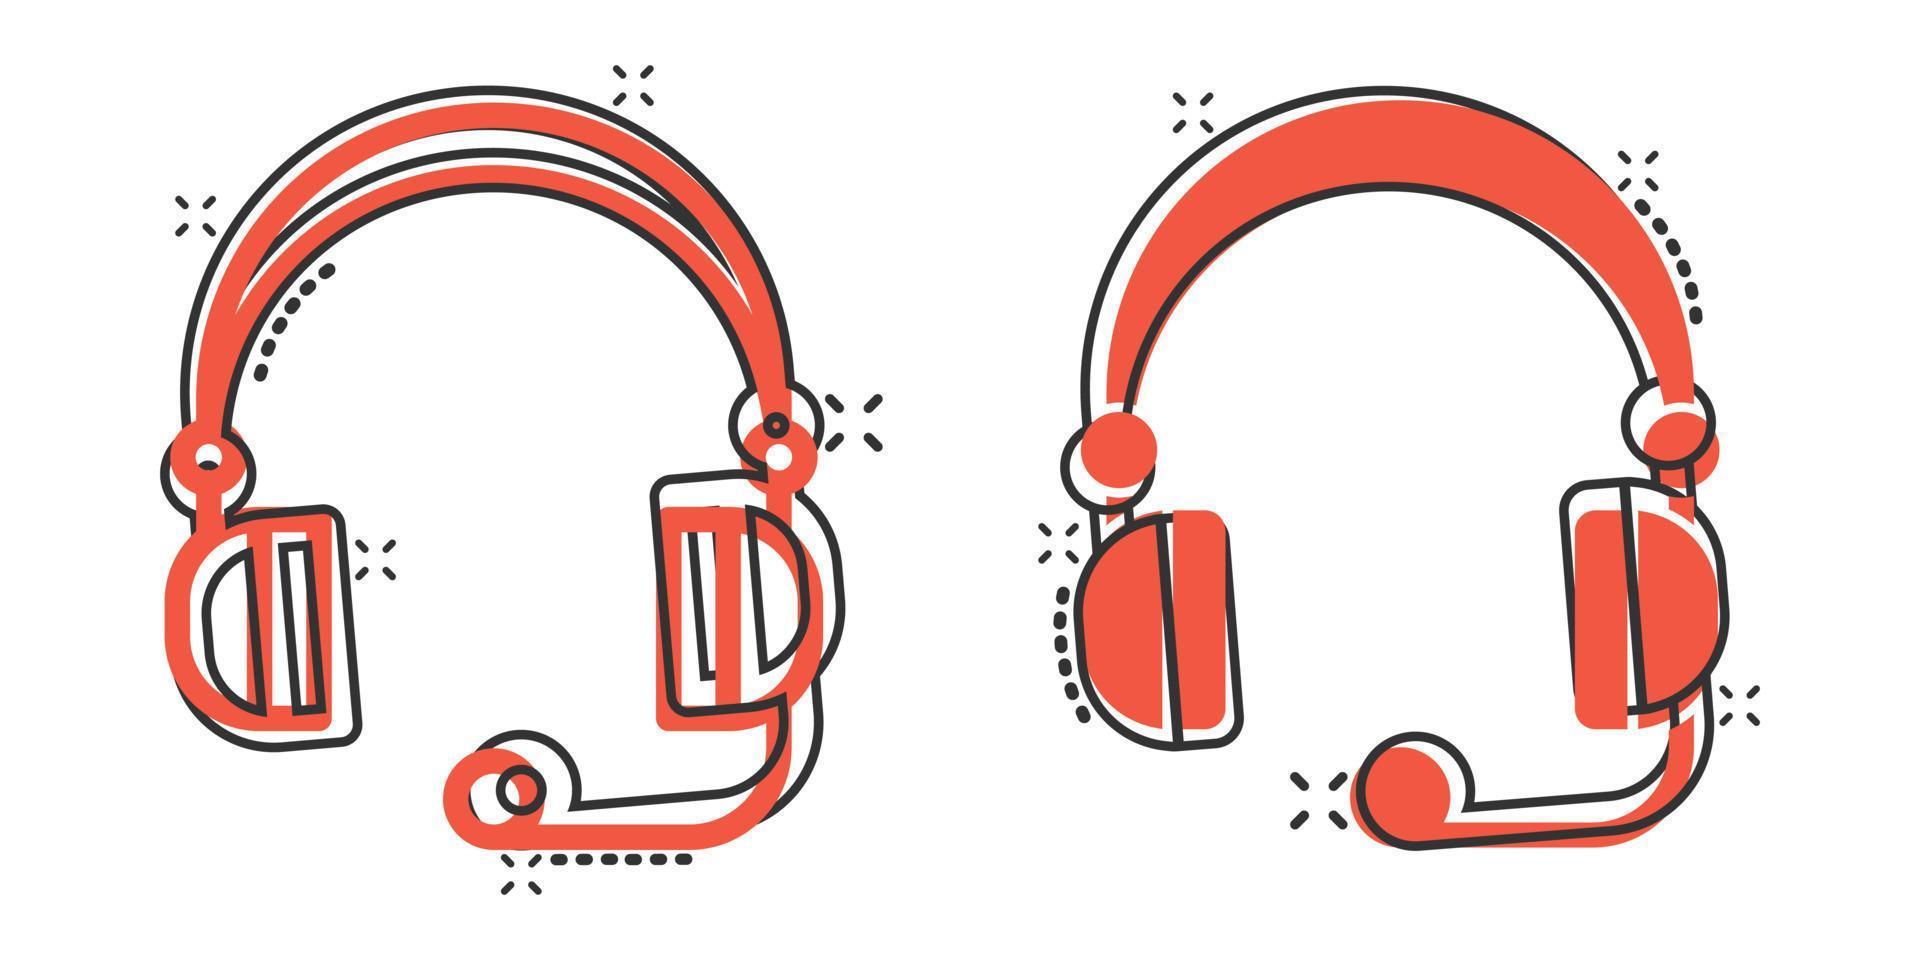 Helpdesk-Symbol im Comic-Stil. Kopfhörerkarikatur-Vektorillustration auf weißem lokalisiertem Hintergrund. Chat-Operator-Splash-Effekt-Geschäftskonzept. vektor